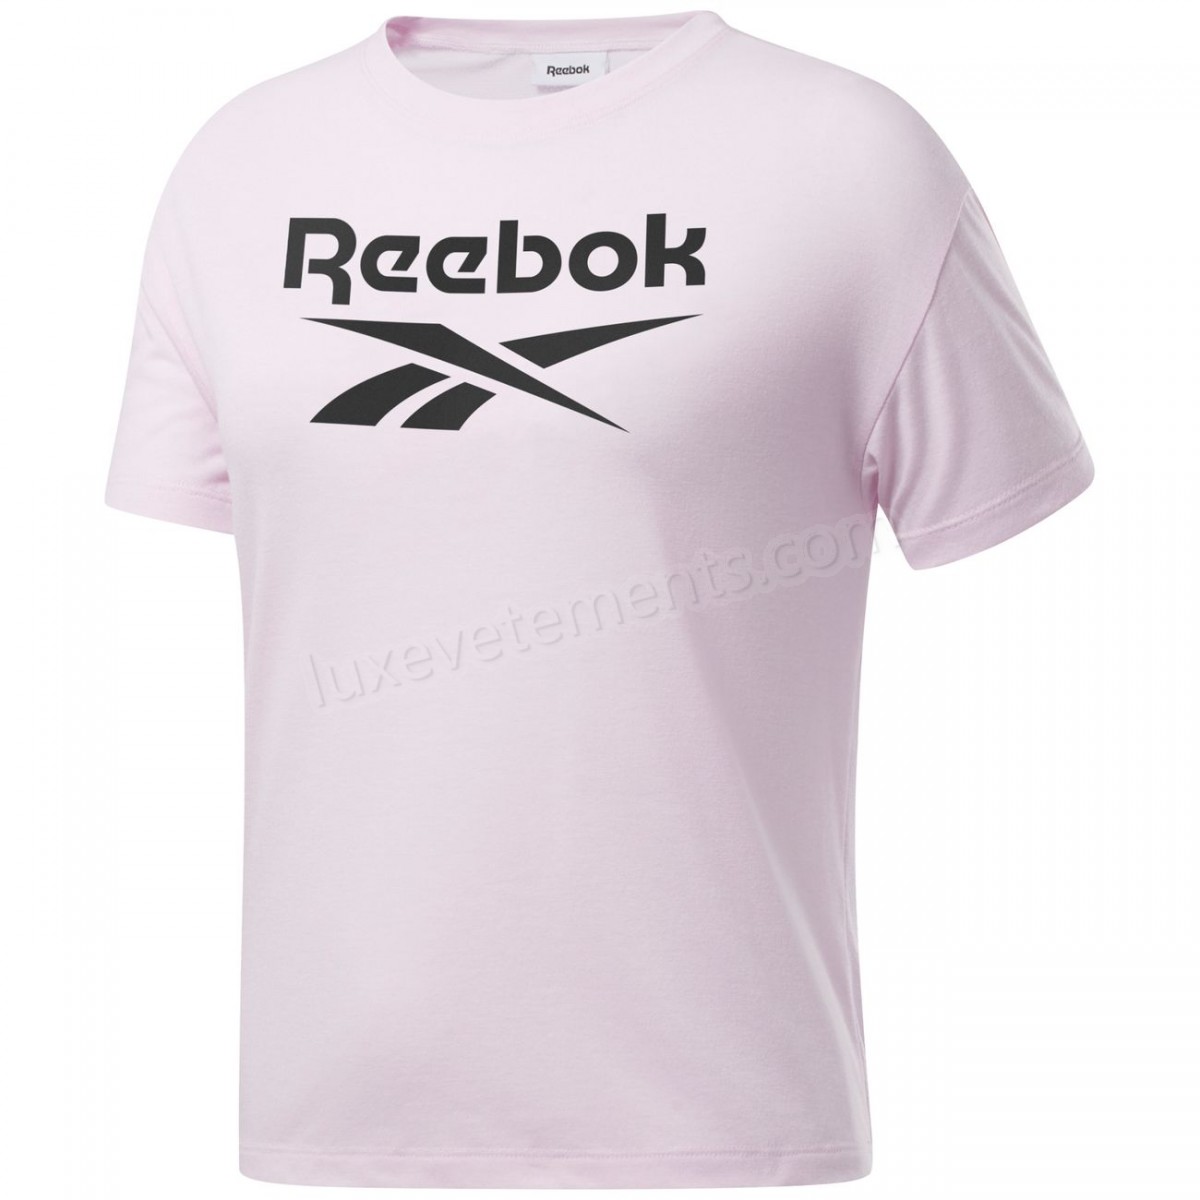 Reebok-Fitness femme REEBOK T-shirt femme Reebok Workout Ready Supremium Logo Vente en ligne - -2